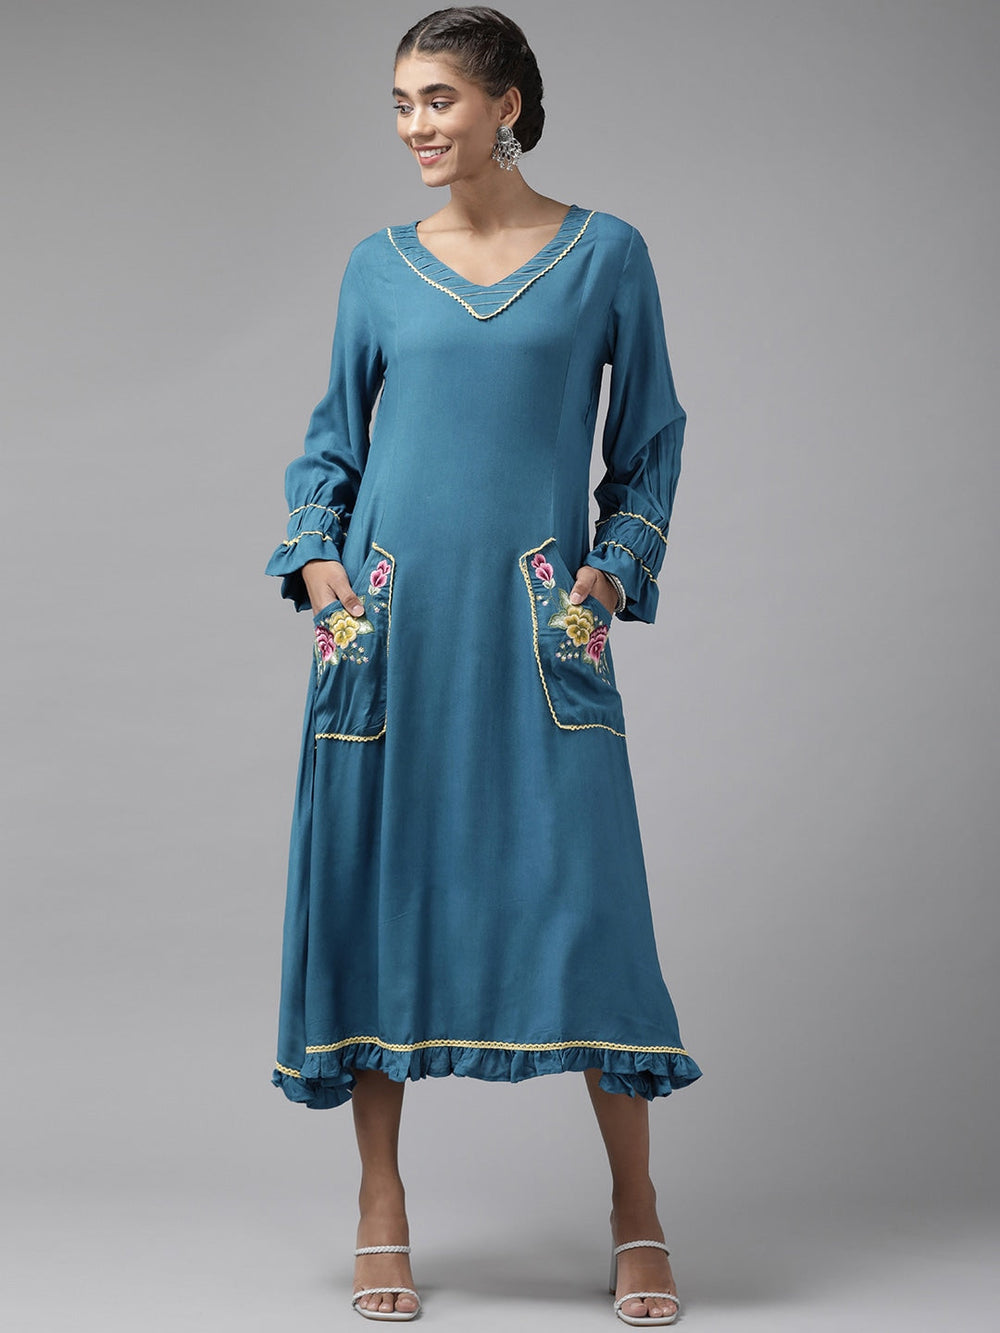 Teal Blue Ethnic Midi Dress